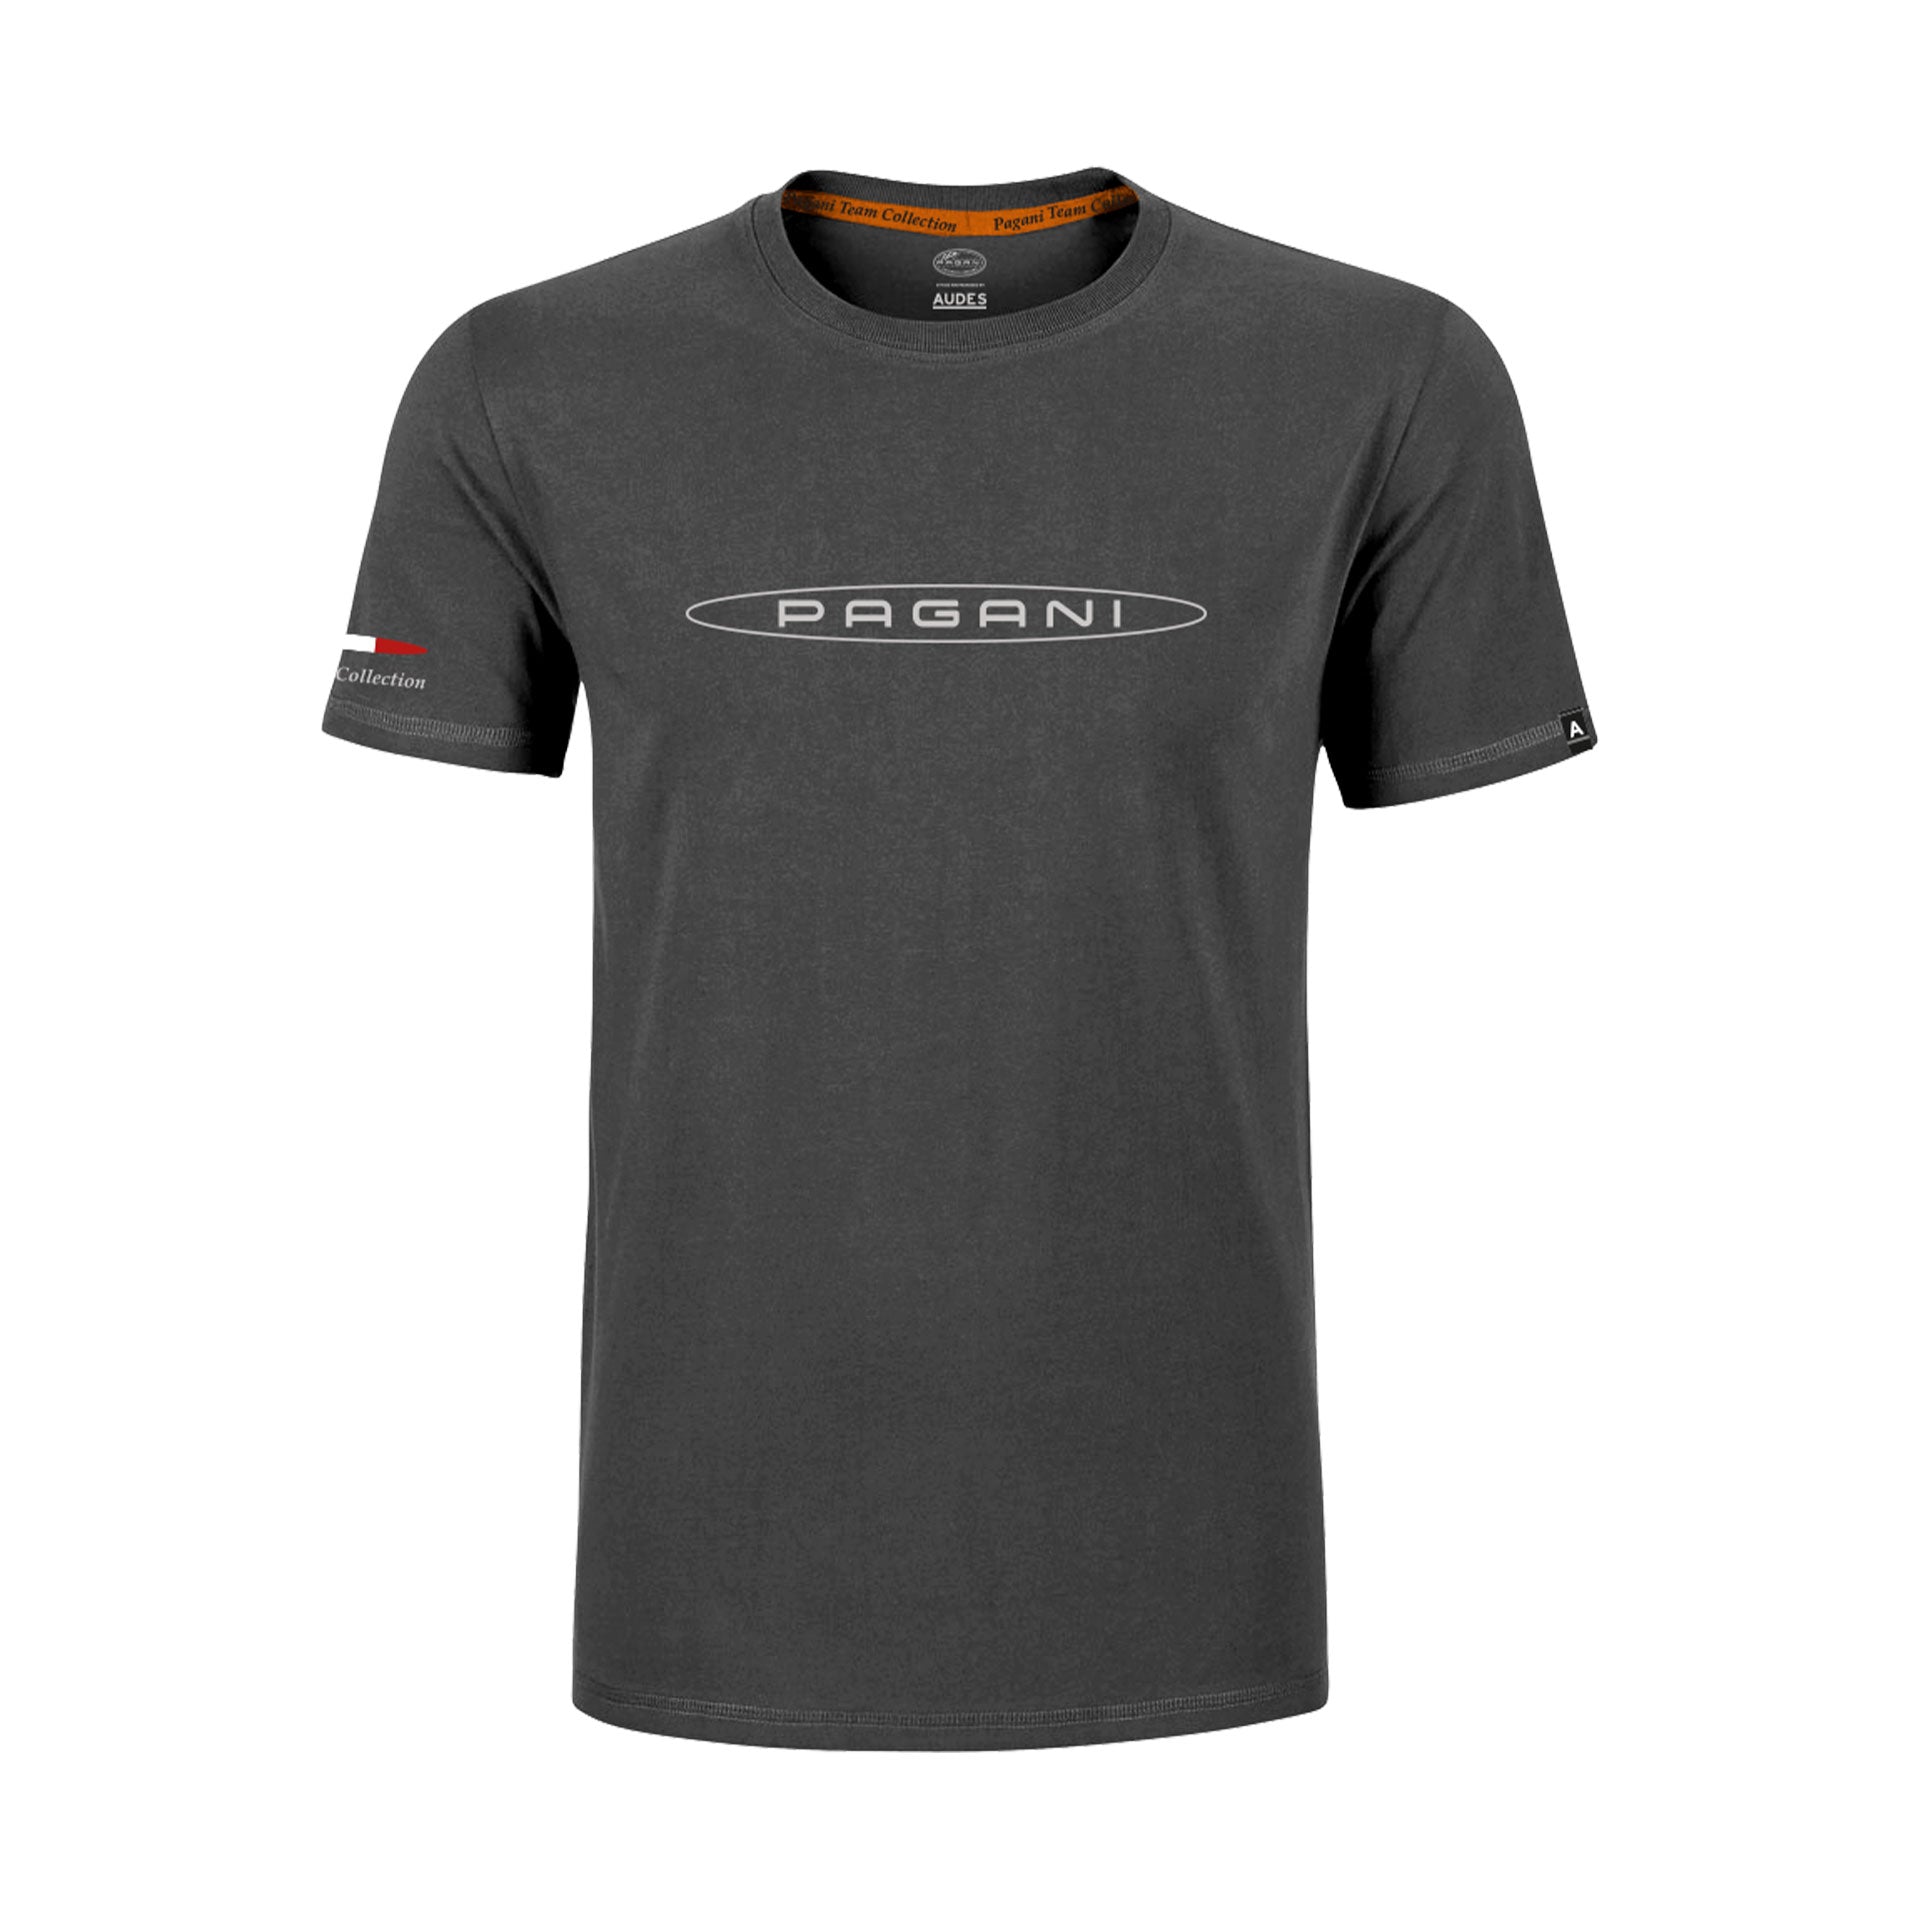 Camiseta color antracita para hombre | Pagani Team Collection